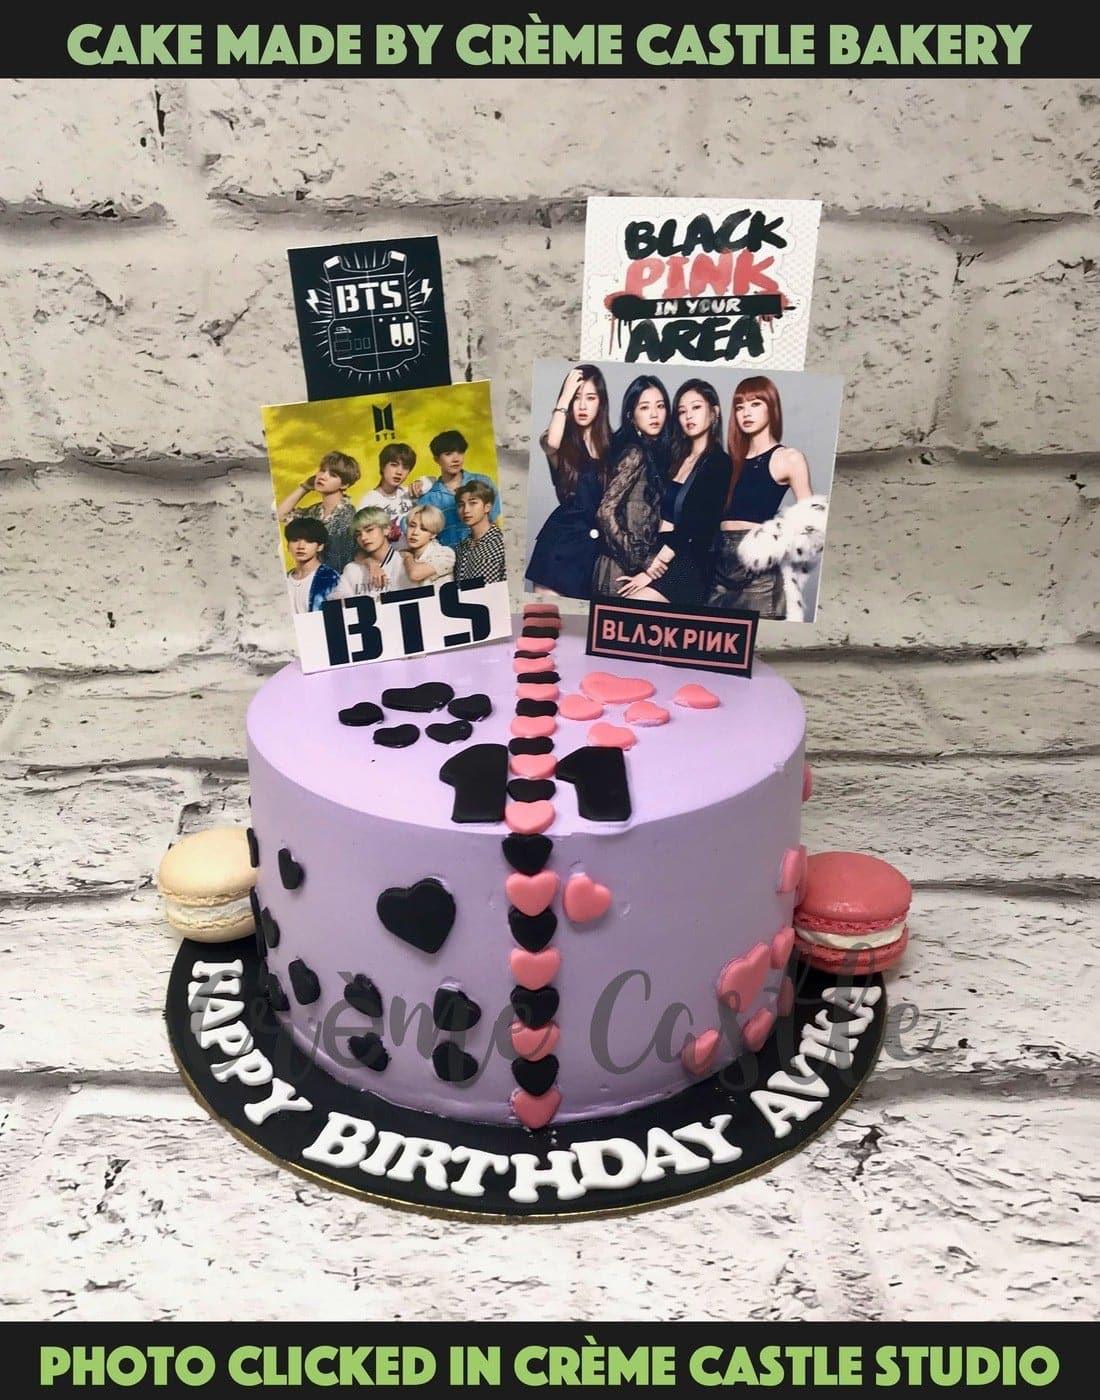 BTS Blackpink Theme Cake by Creme Castle